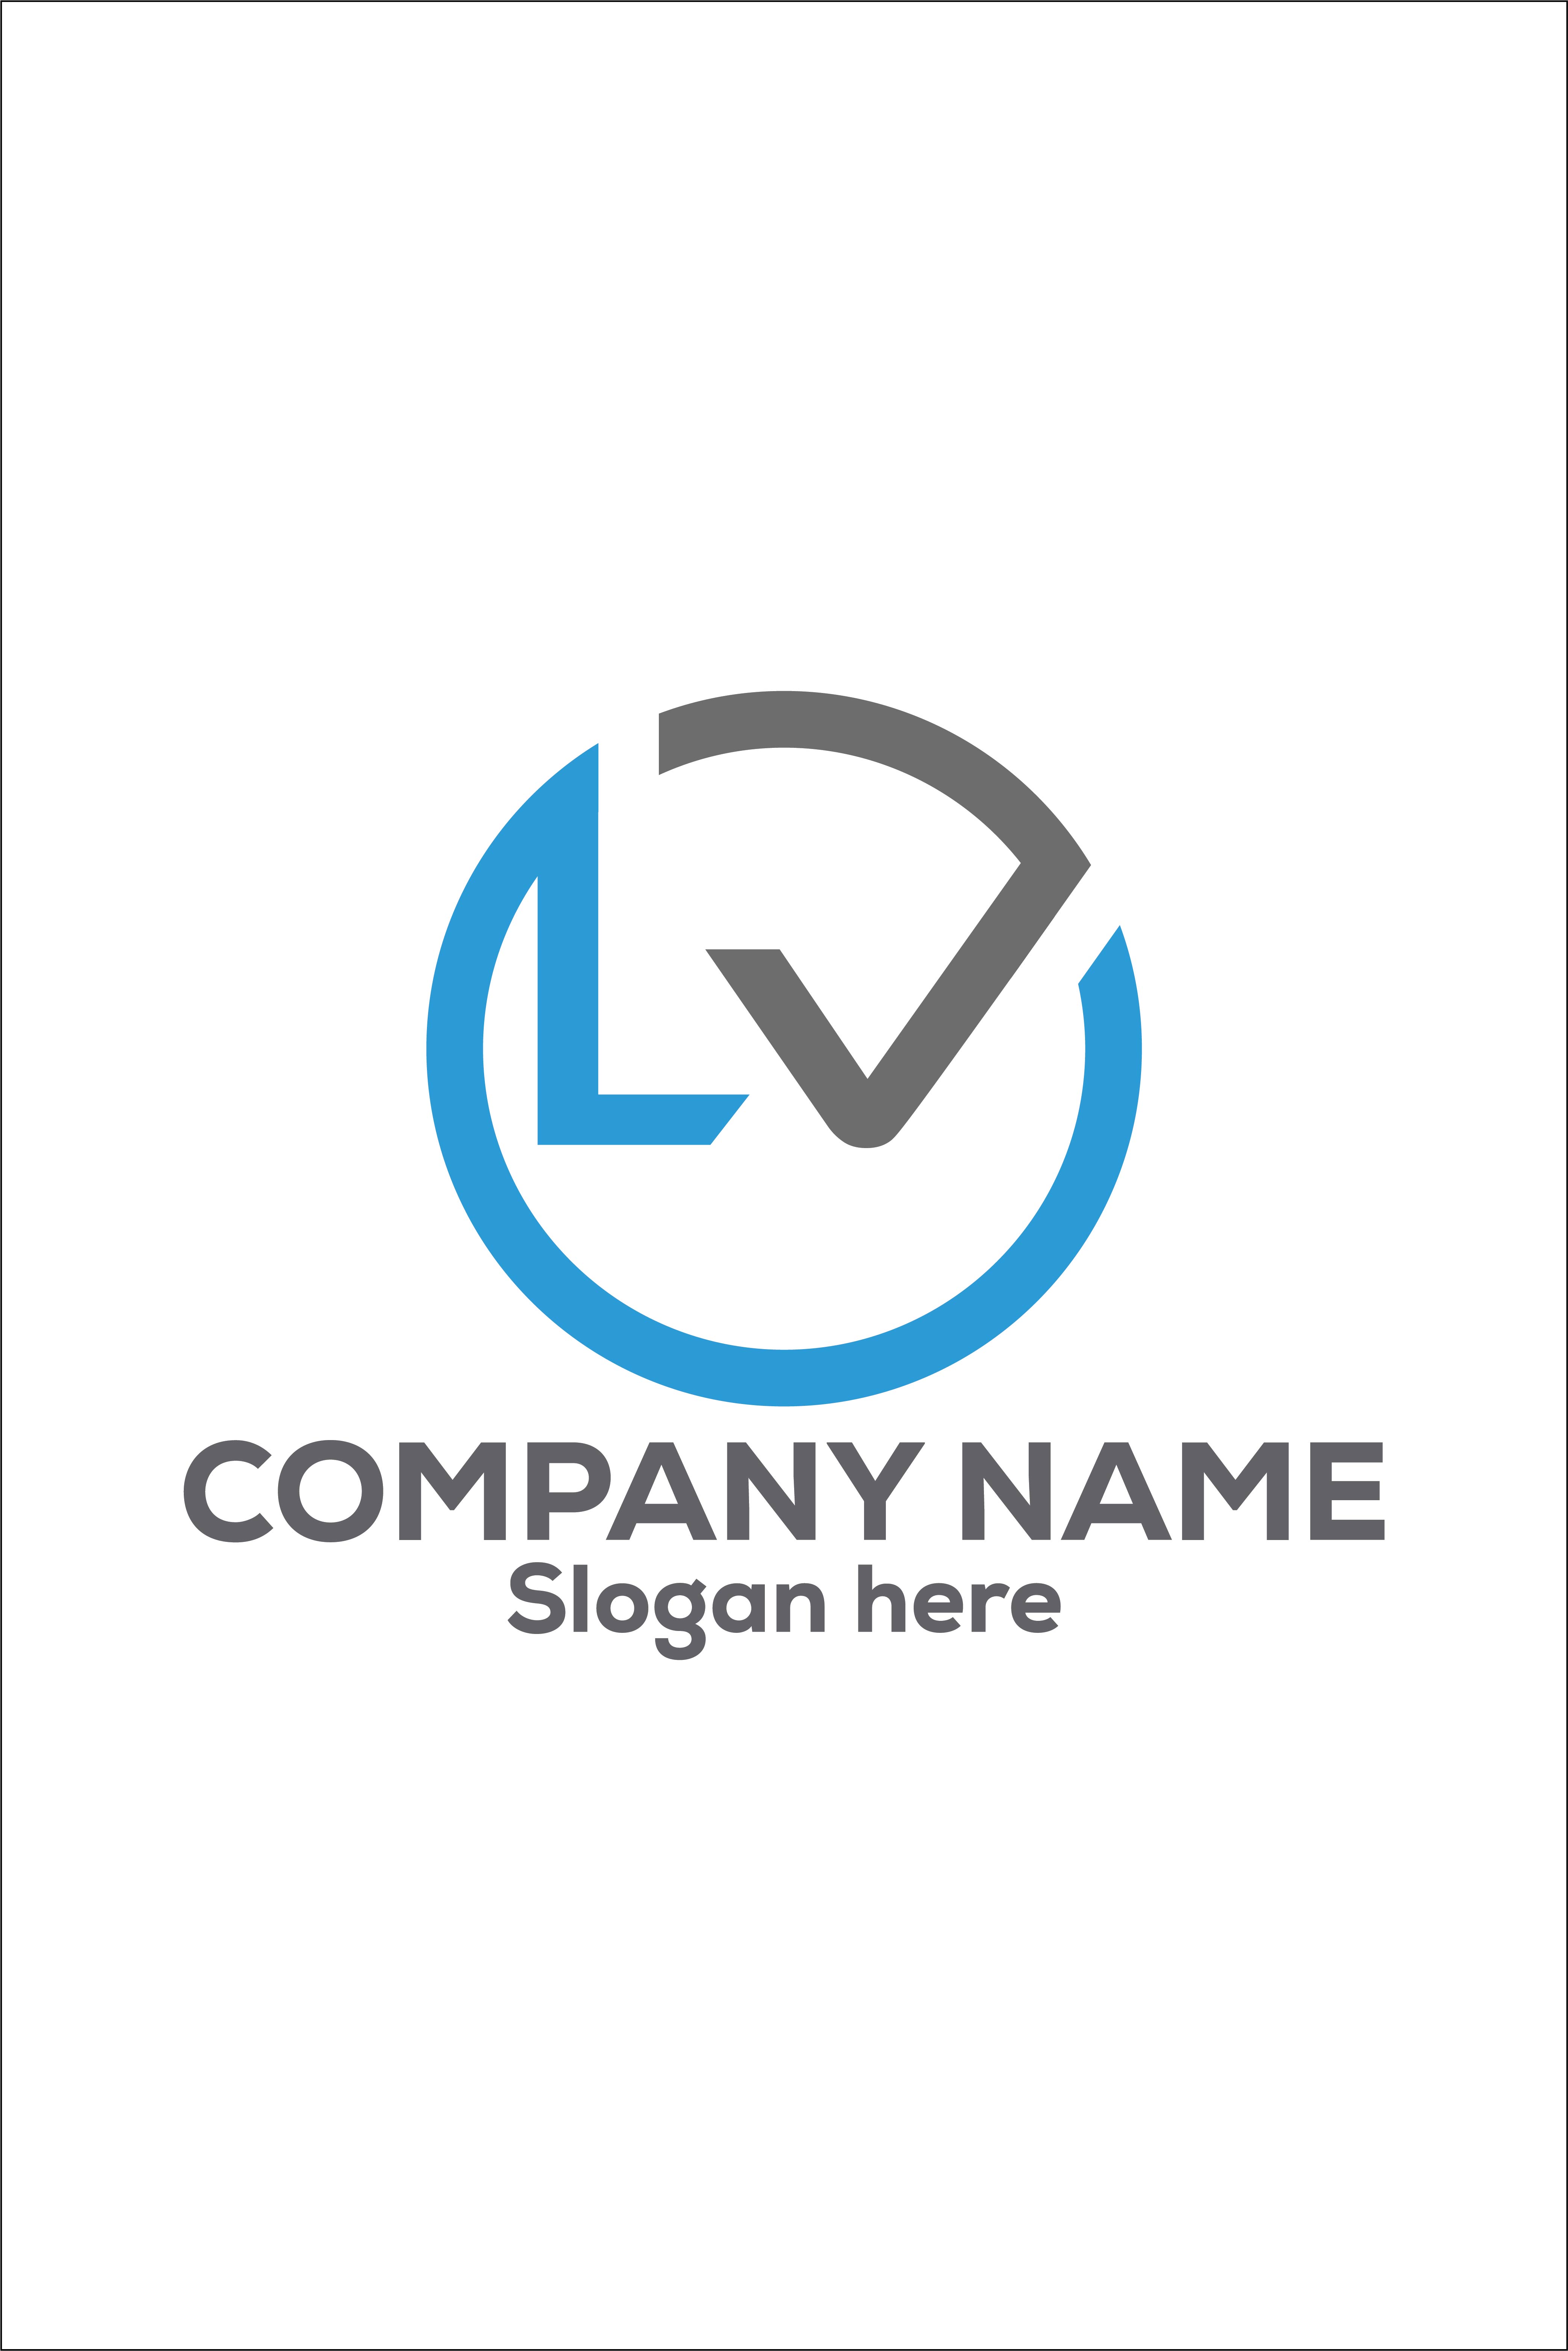 Lv Logo Vector Design Images, Initial Letter Lv Logo Template